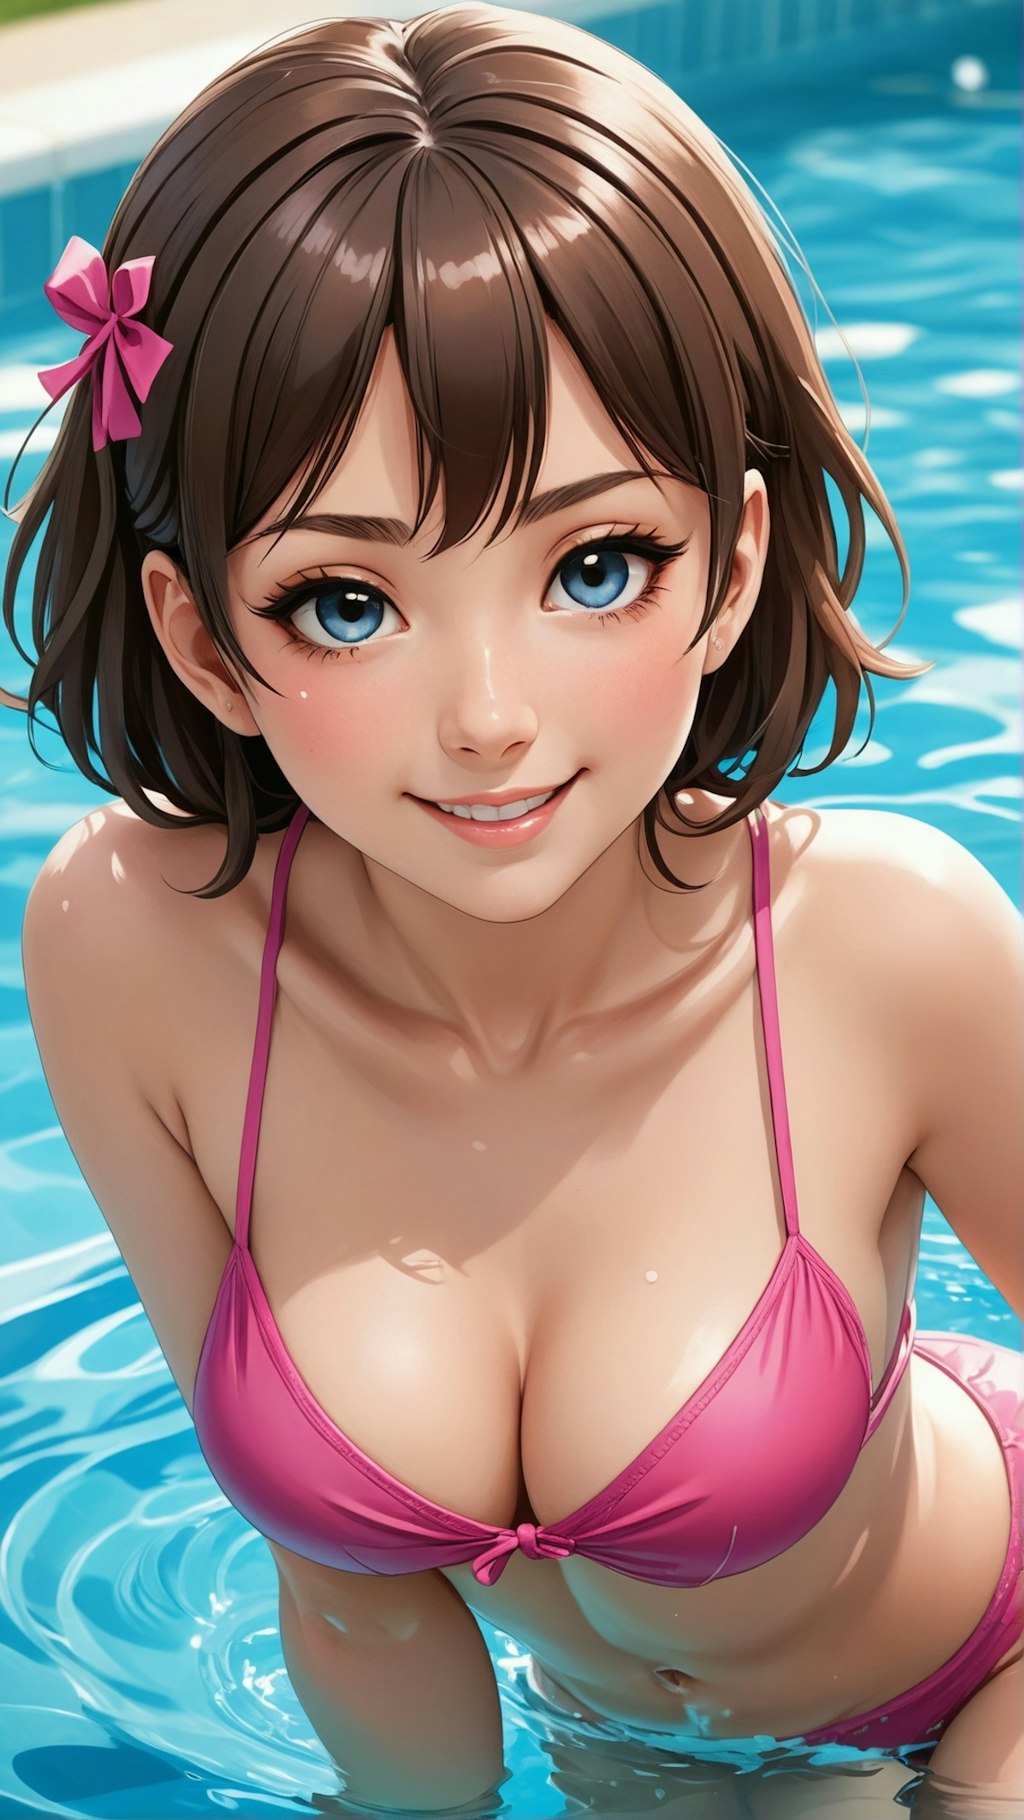 Bikini babes realistic anime girl 2